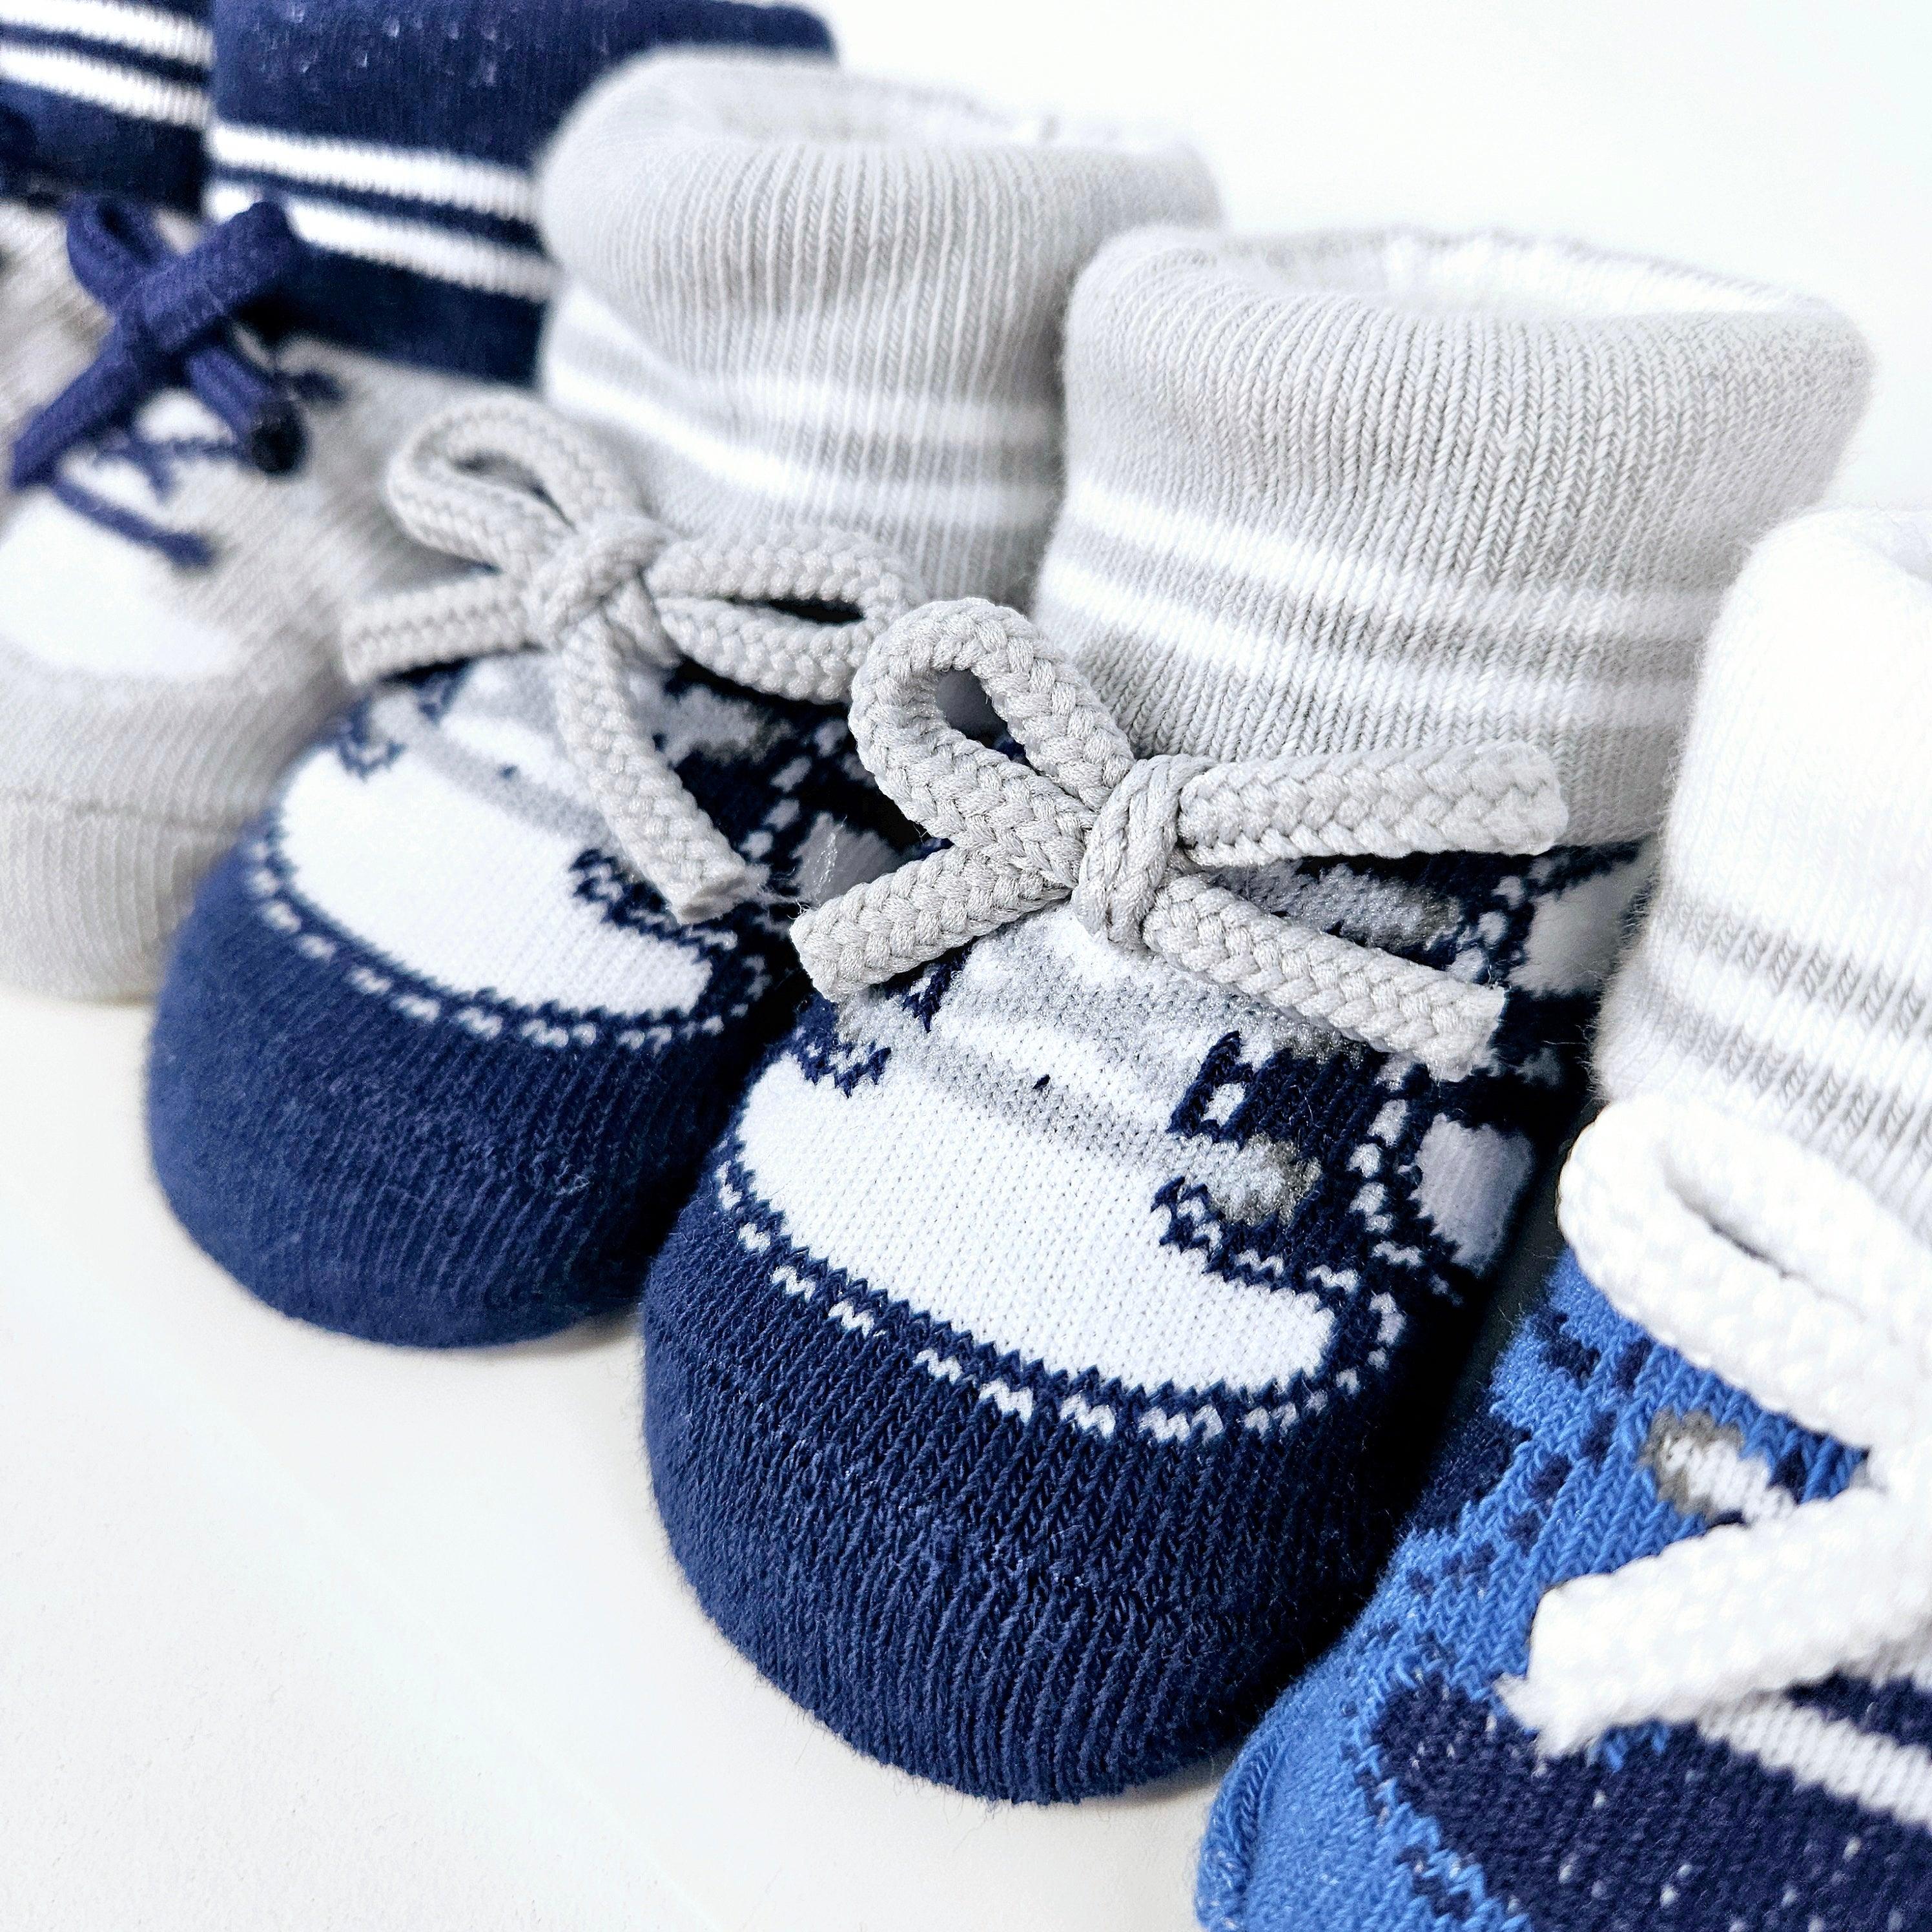 3 Pack Boys 0-9 Months Baby Socks - Smoochie